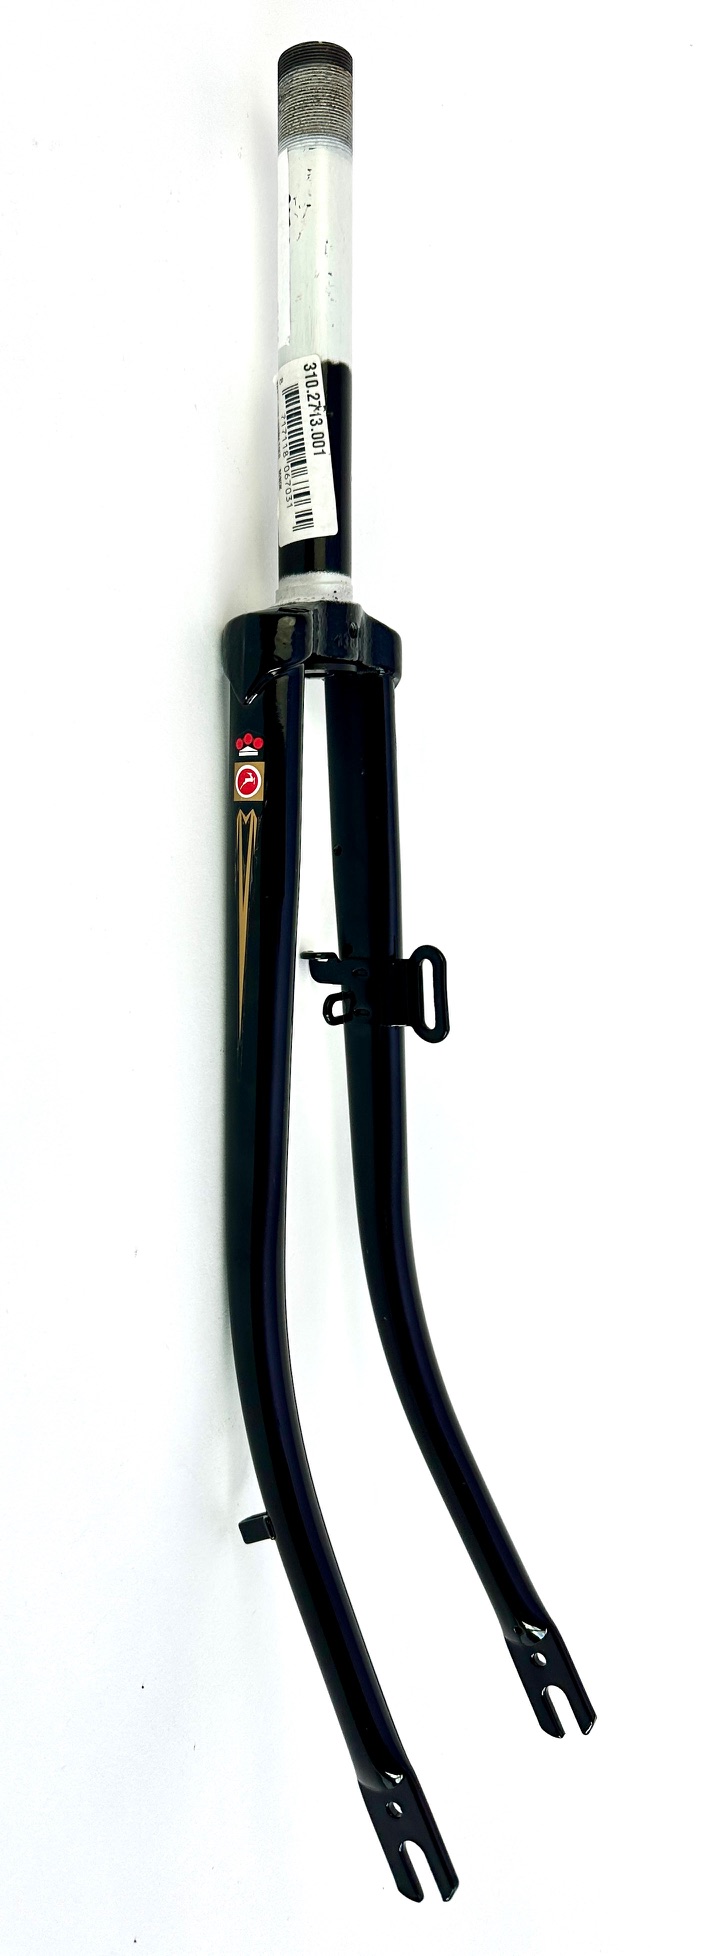 Gazelle Fahrradgabel 28 Zoll Schaftlänge 180 mm, schwarz